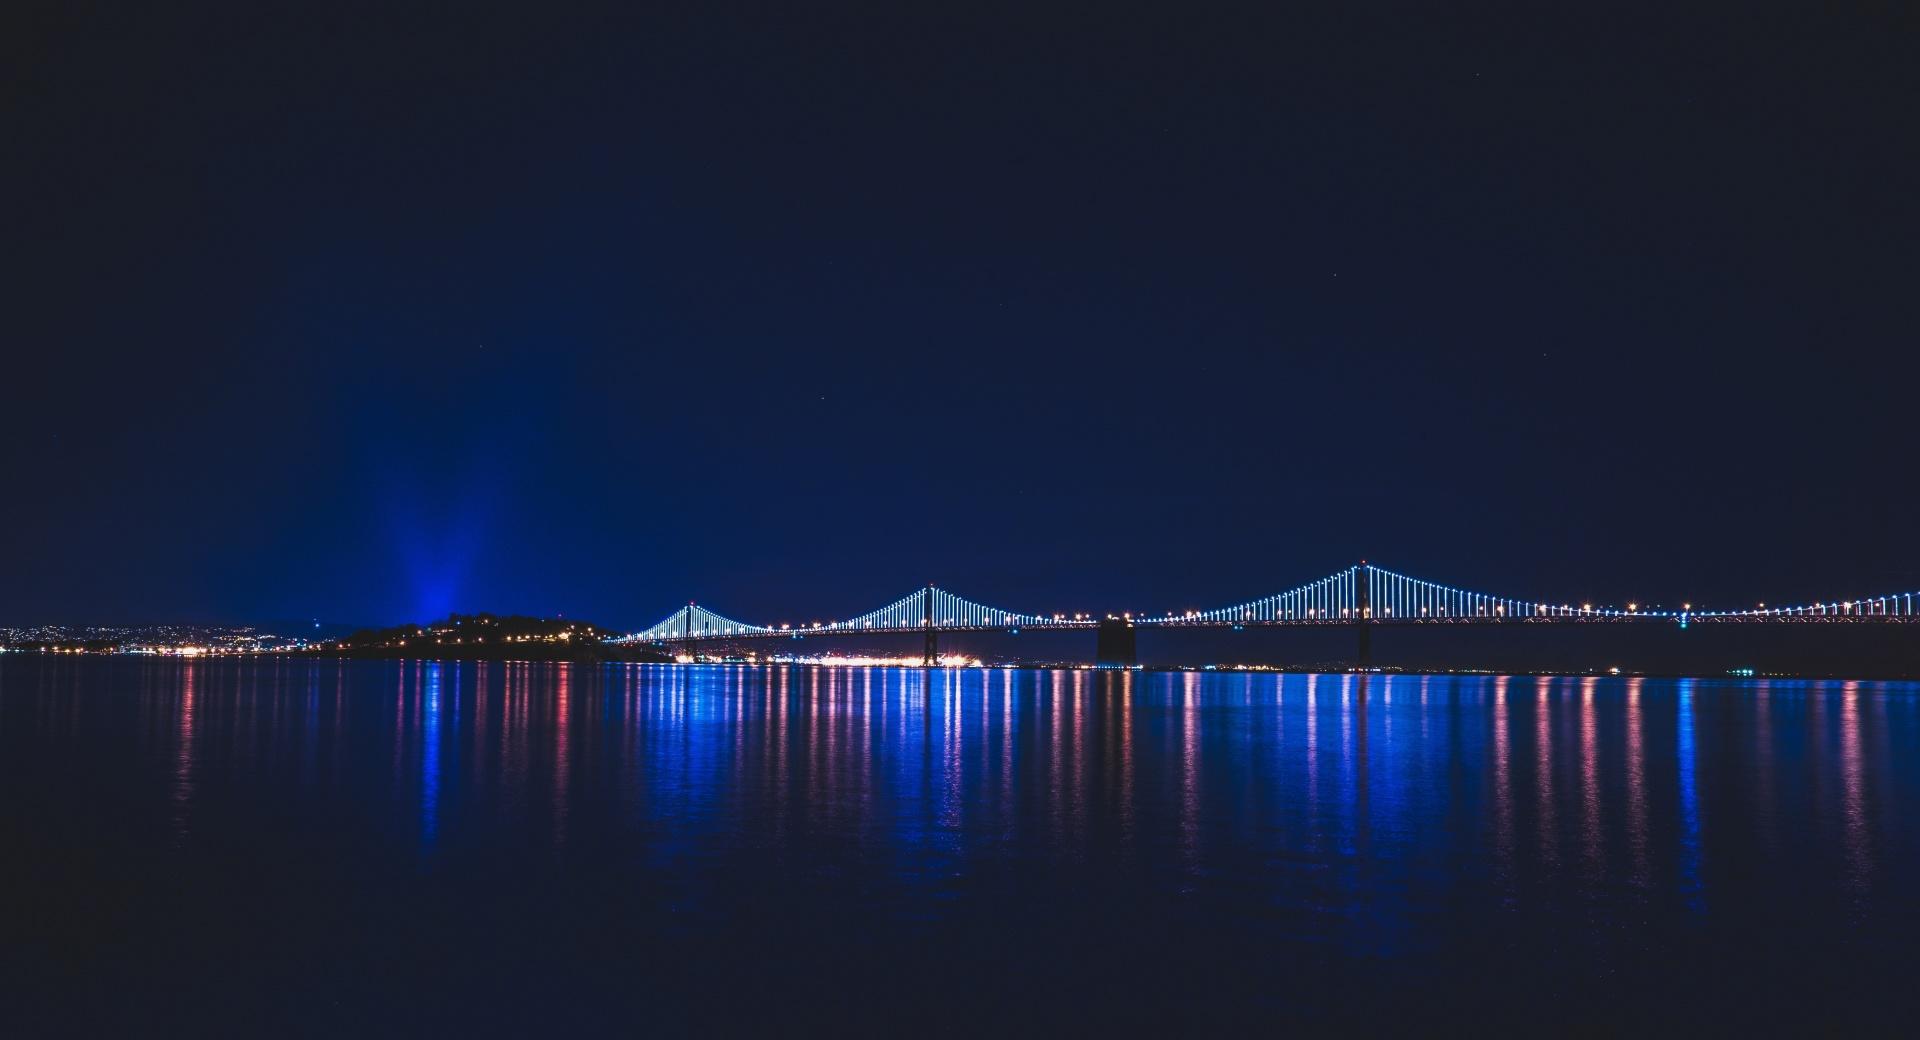 Bridge, Night at 1024 x 768 size wallpapers HD quality